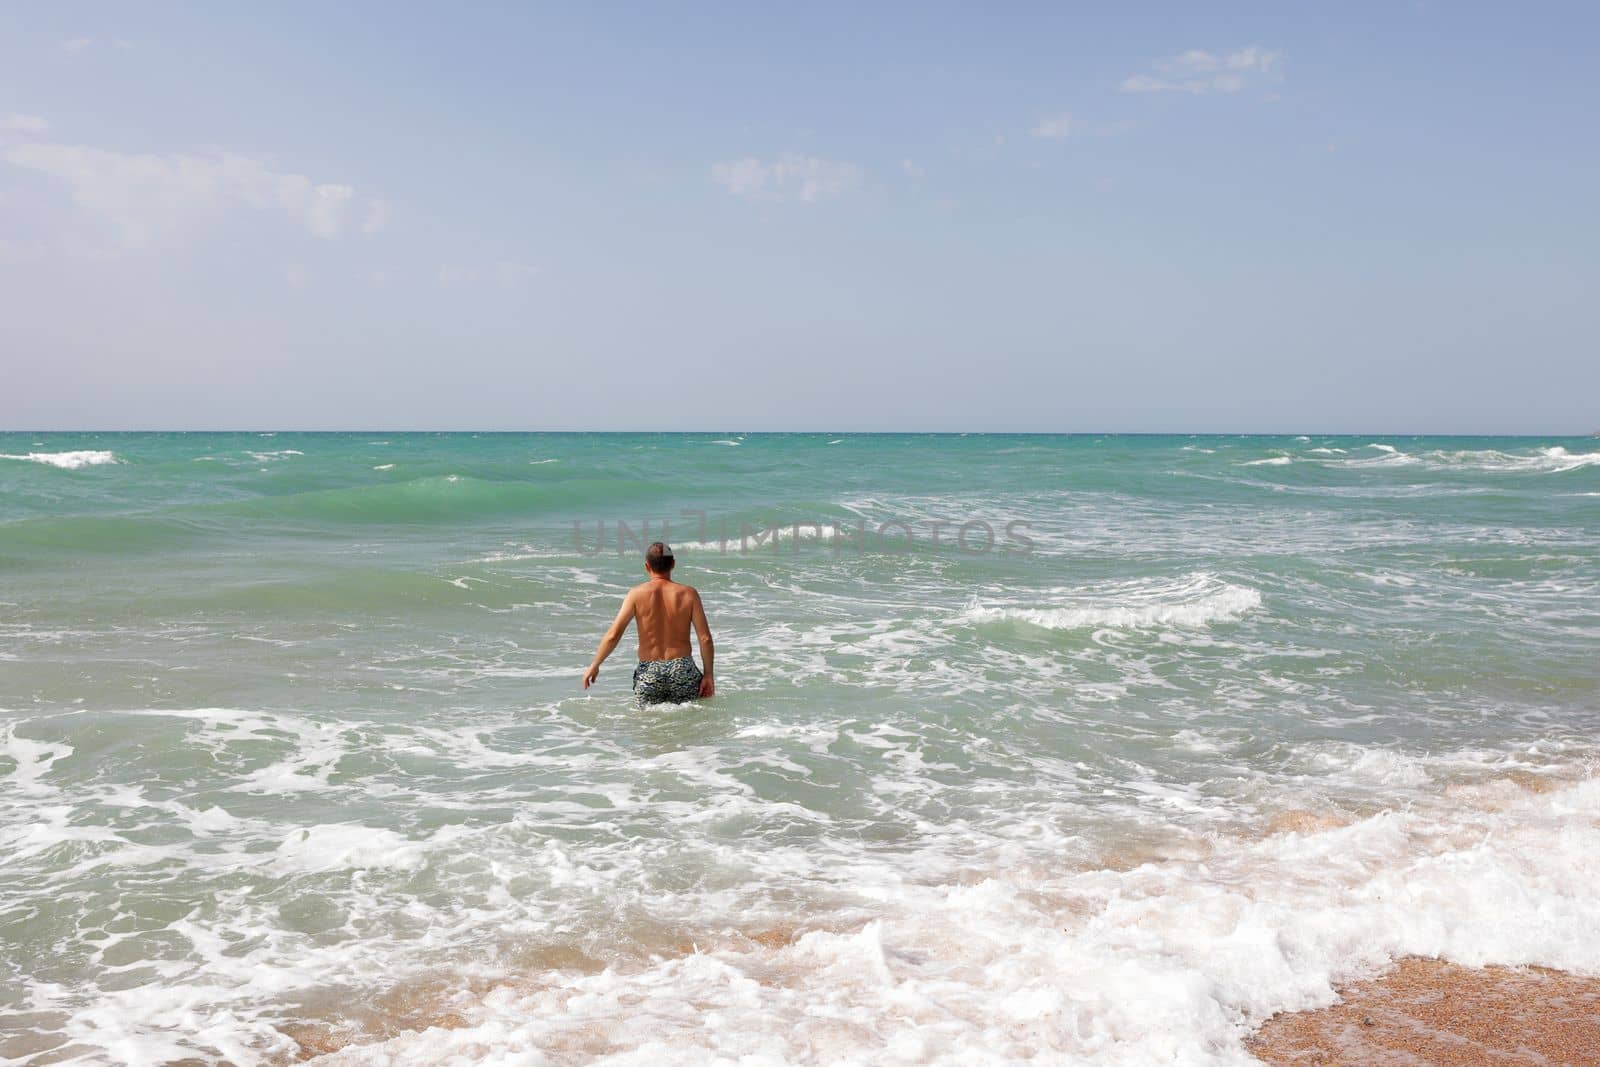 man enters the sea to swim. Moderate waves on the sea, sandy beach.